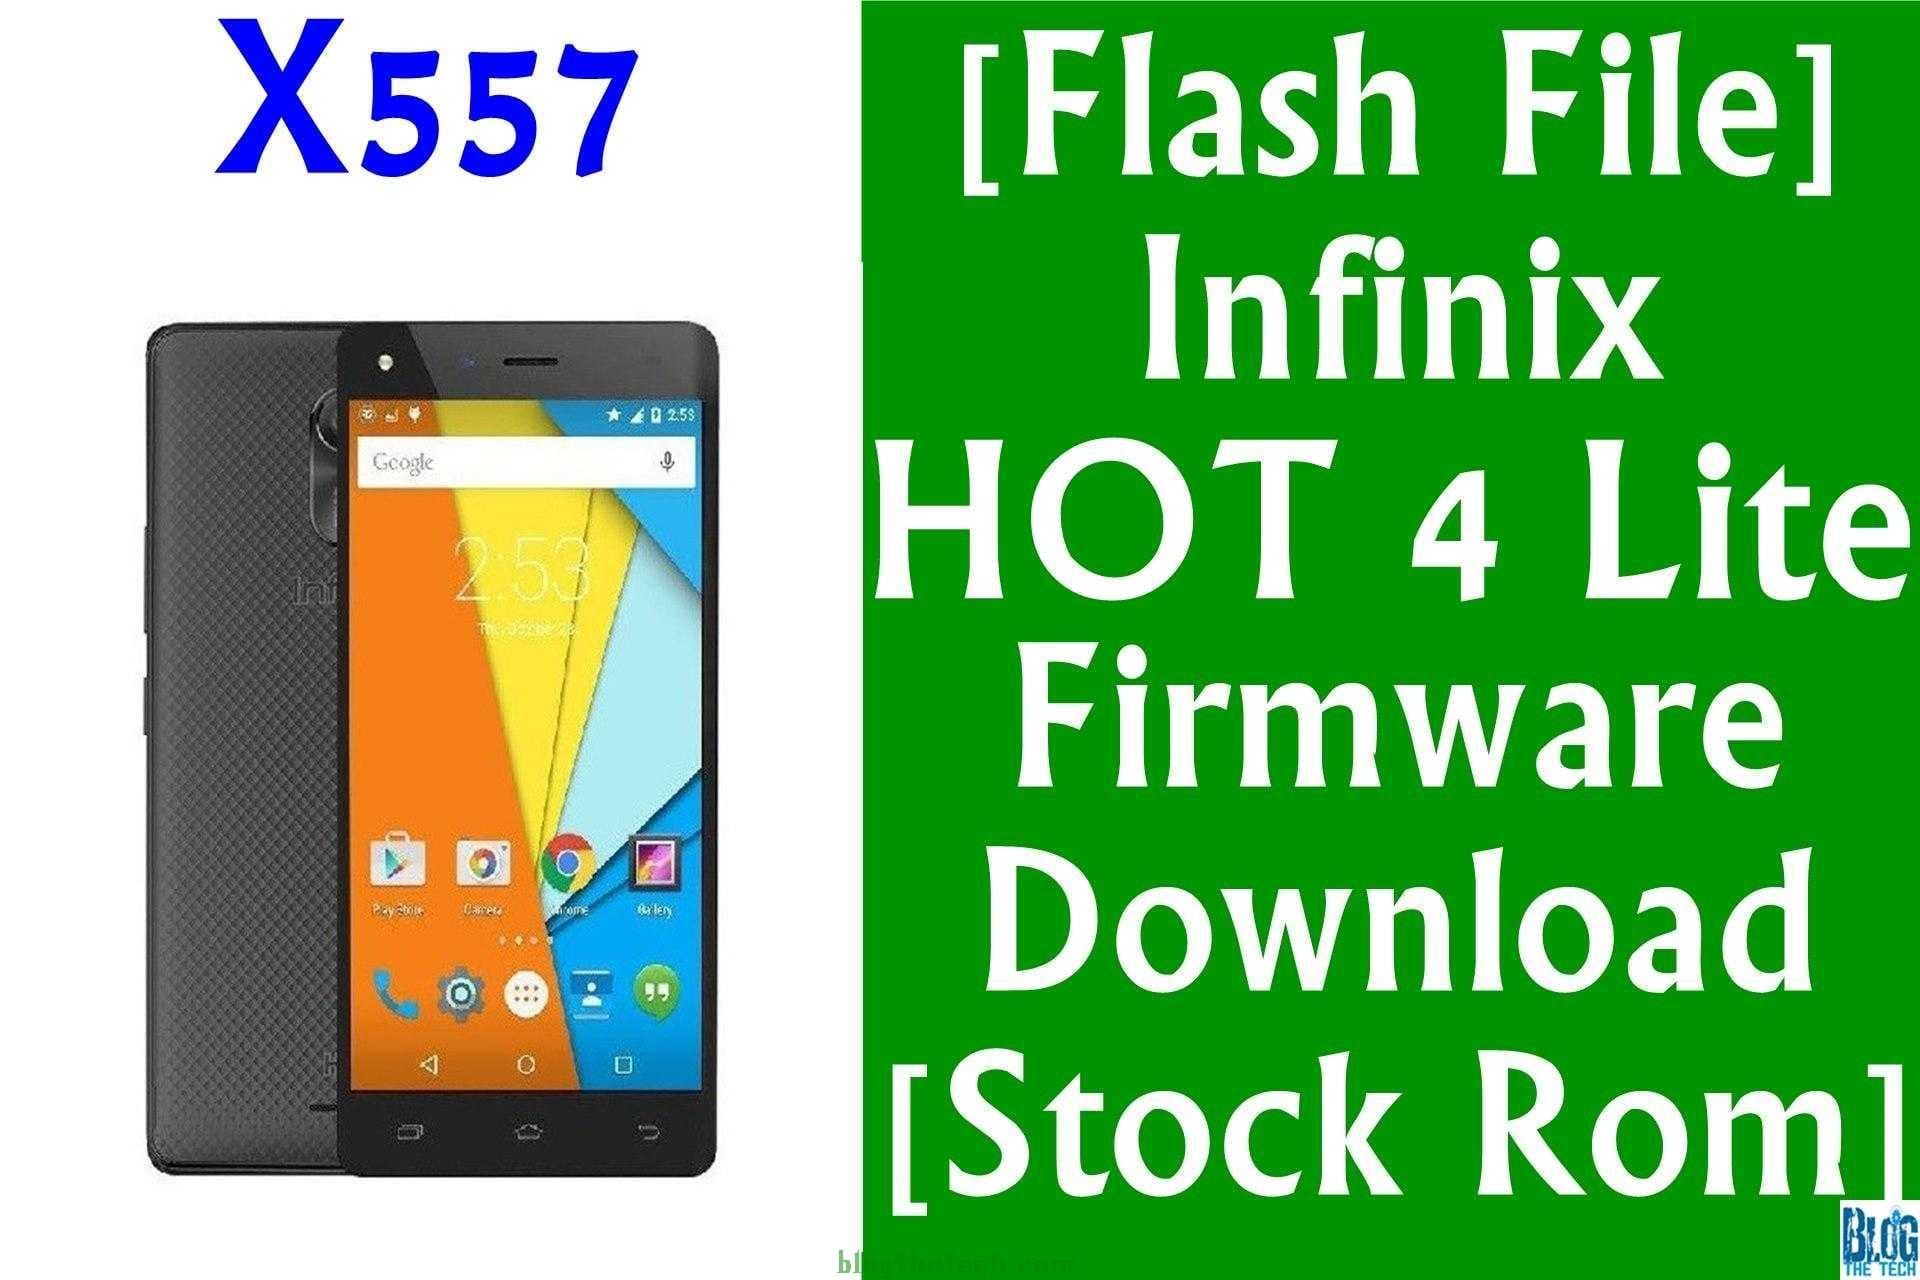 Infinix Hot 4 Lite X557